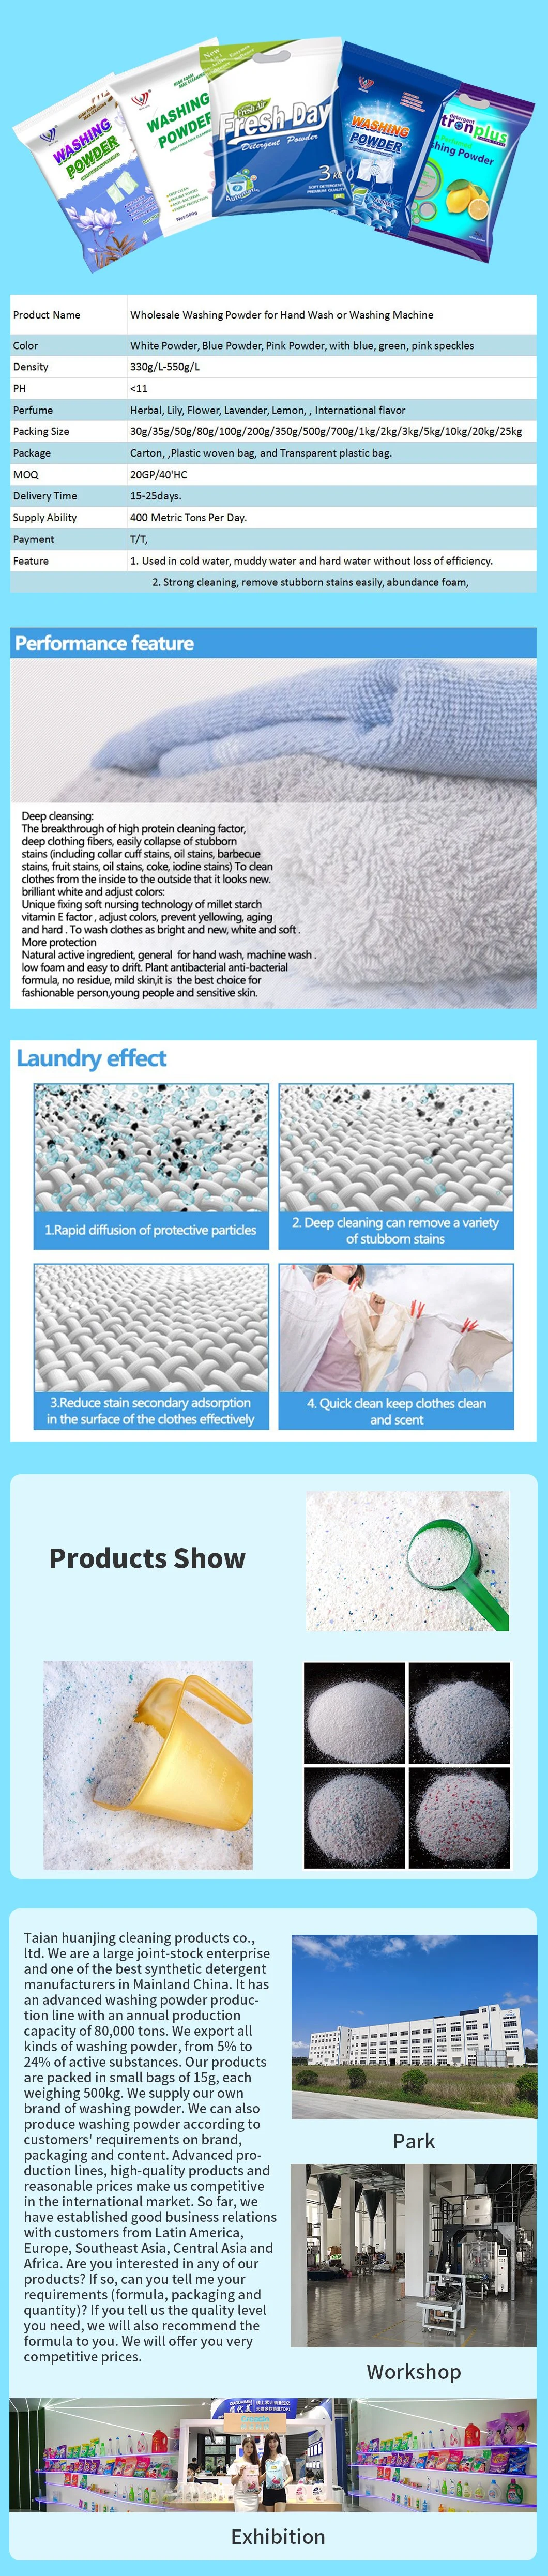 Machine Wash / Hand Wash / Strong Fragrance / High Foaming / Washing Powder Soap Powder / Laundry Detergent